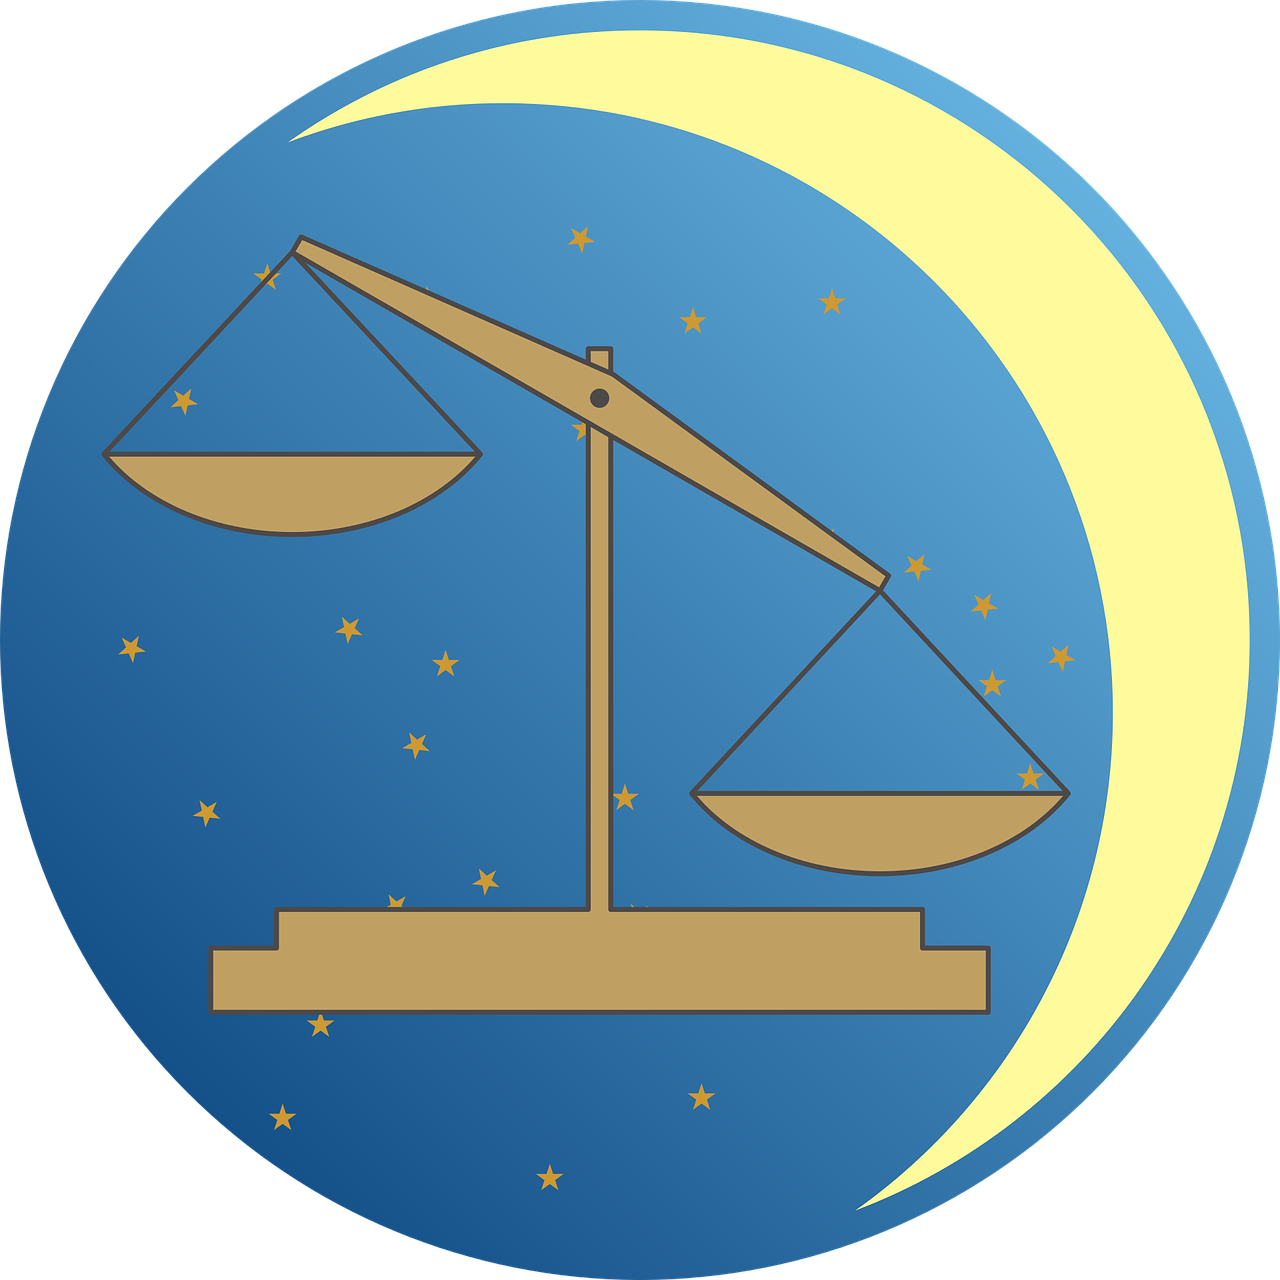 Illustration of the zodiac sign Libra | Source: Pixabay